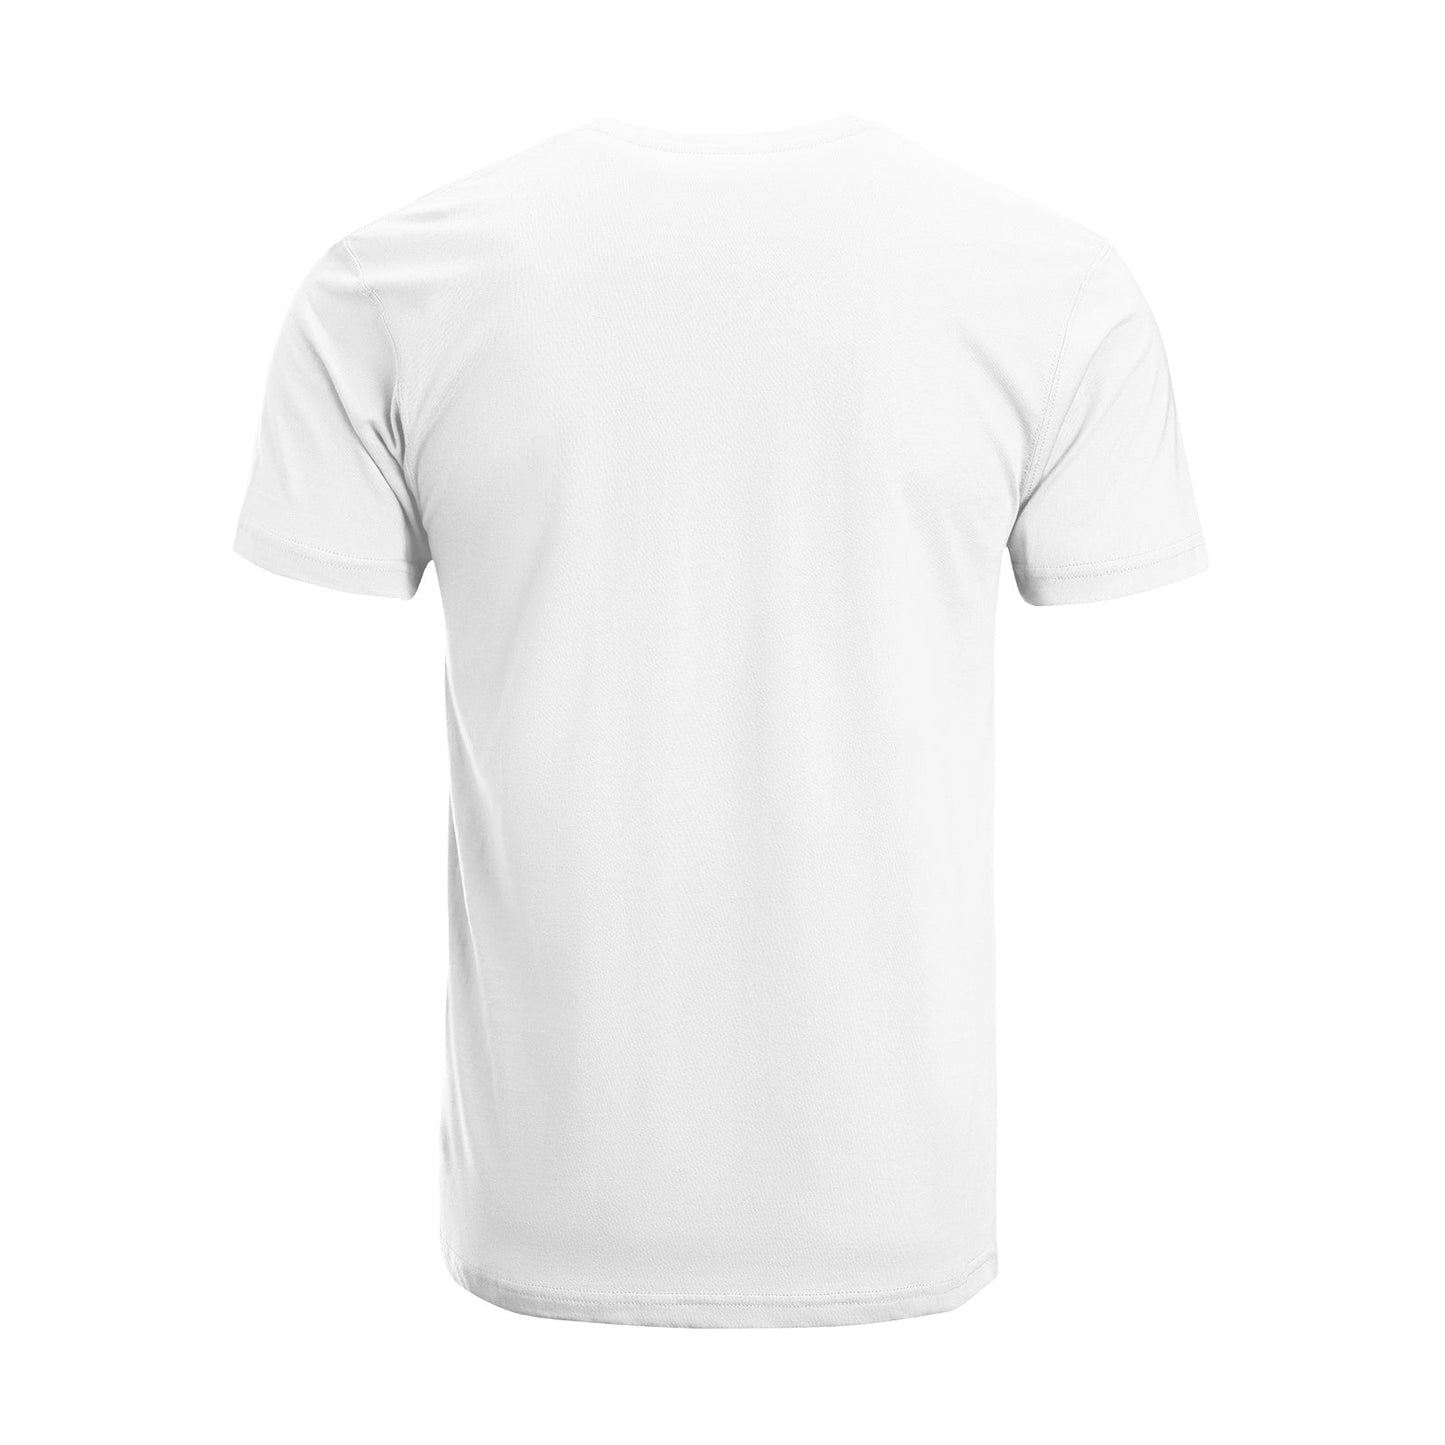 Unisex Short Sleeve Crew Neck Cotton Jersey T-Shirt MOM 39